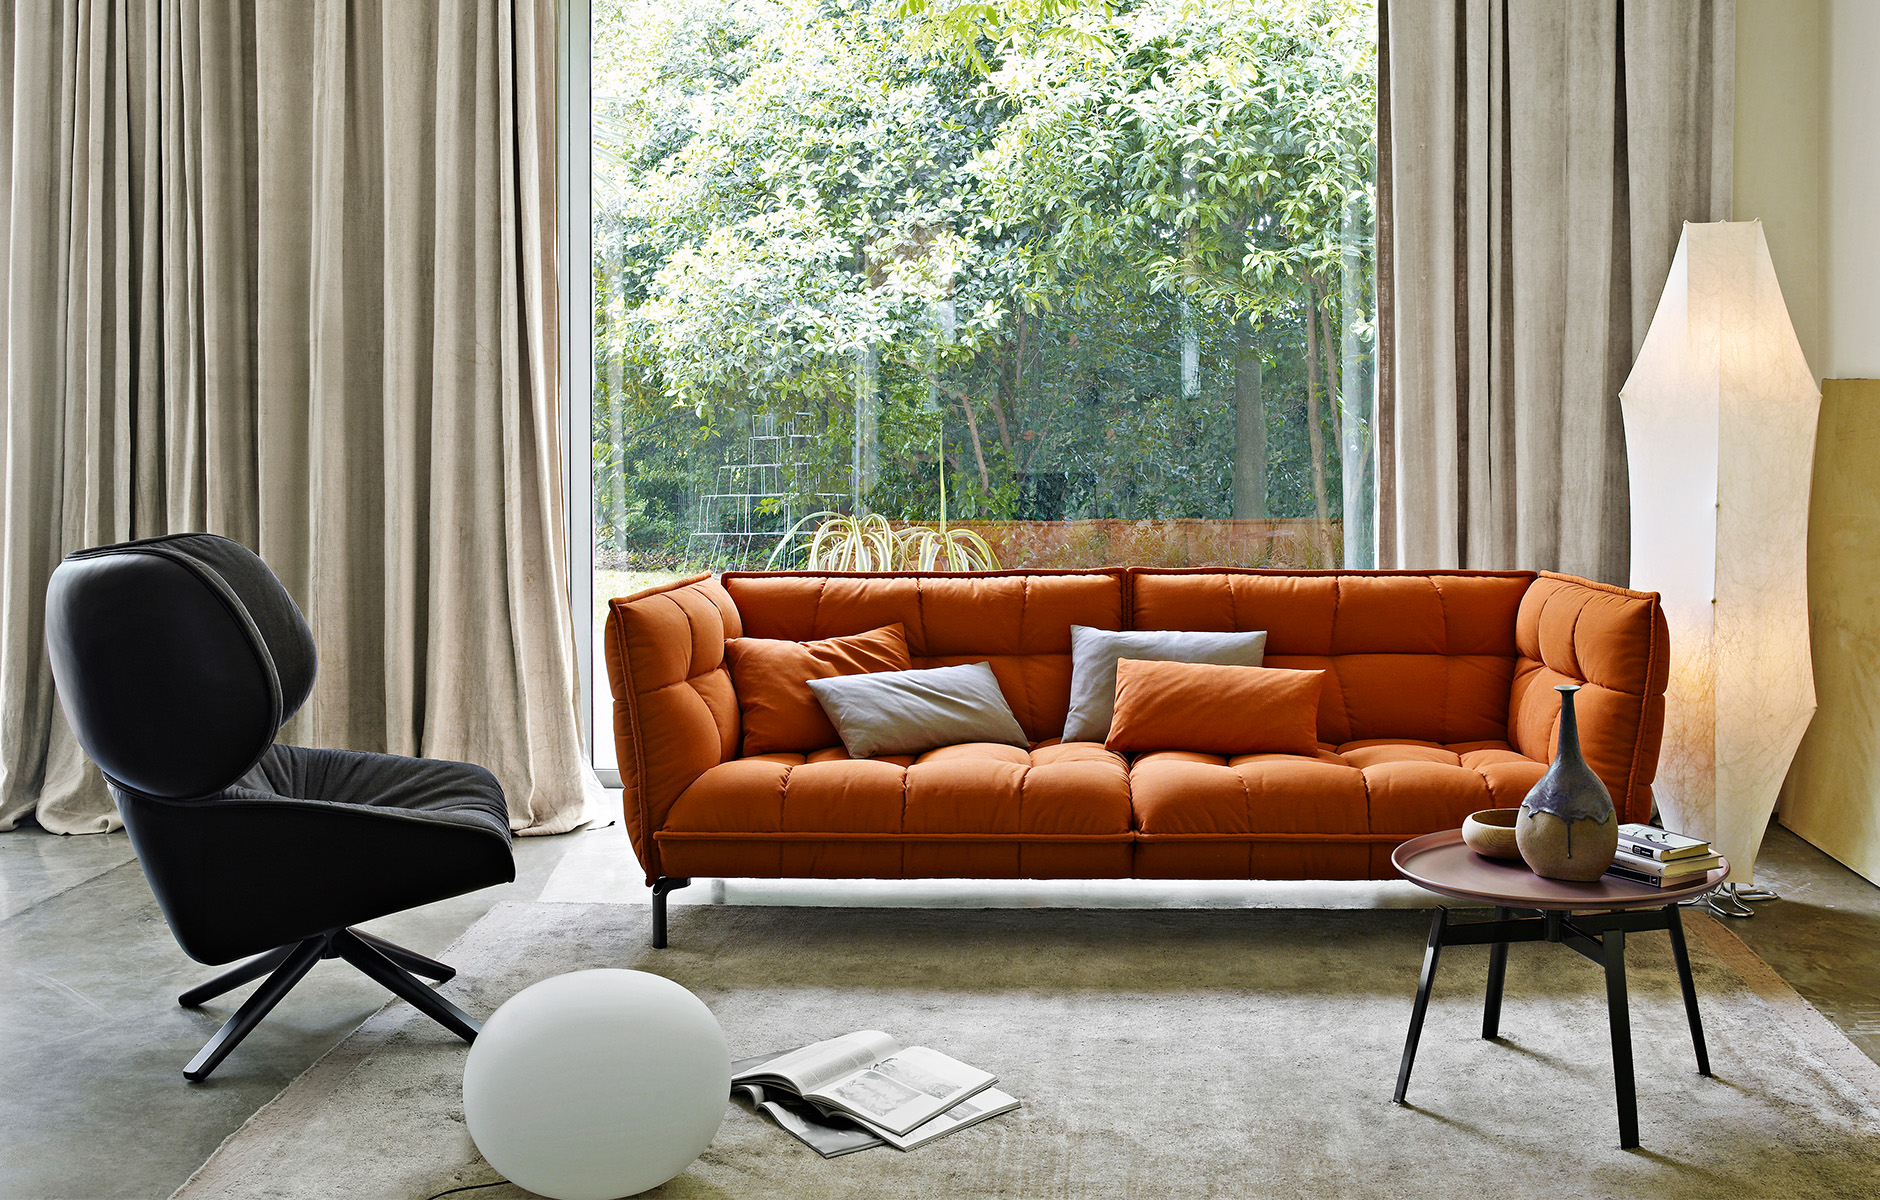 Husk sofa designed by Patricia Urquiola for B&B Italia. Photo c/o B&B Italia.